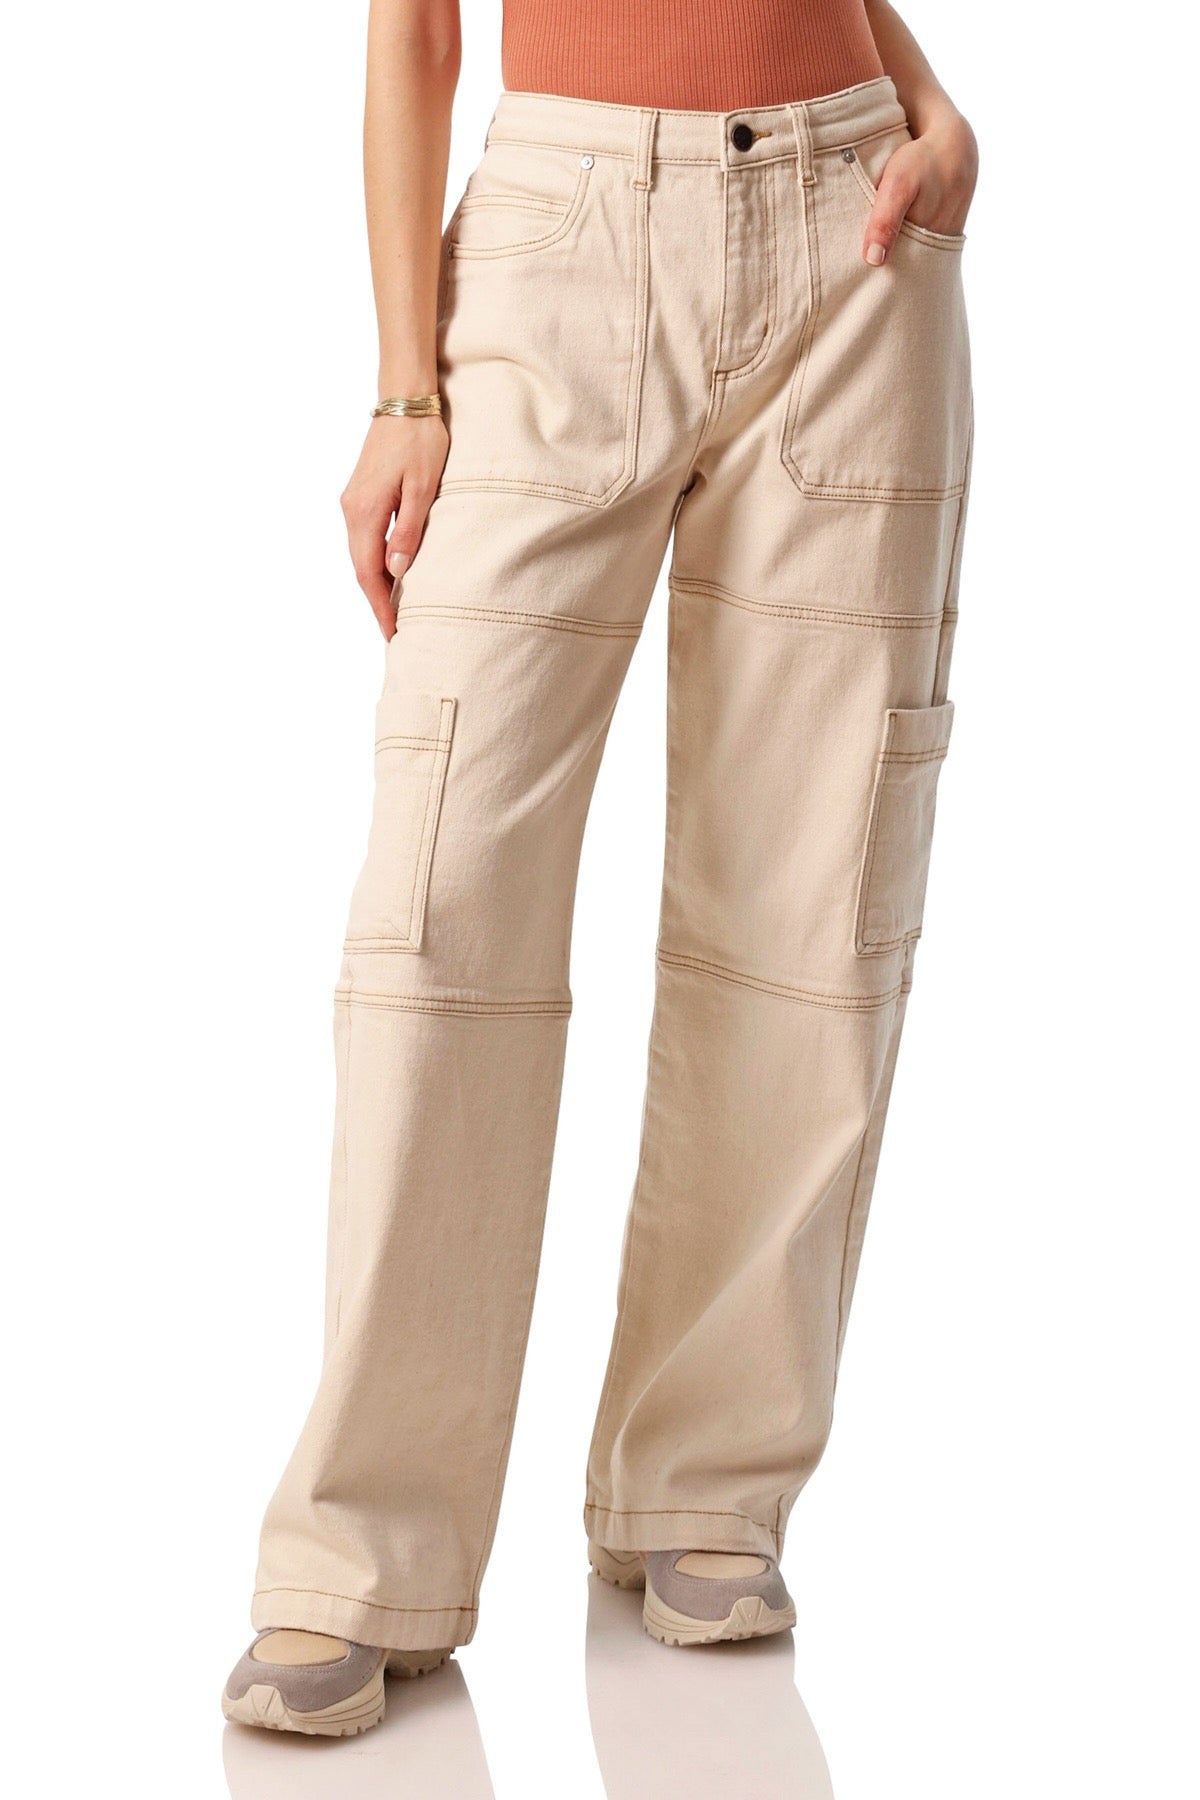 mid rise stretch denim cargo pants ecru beige - flattering fashion pant for women